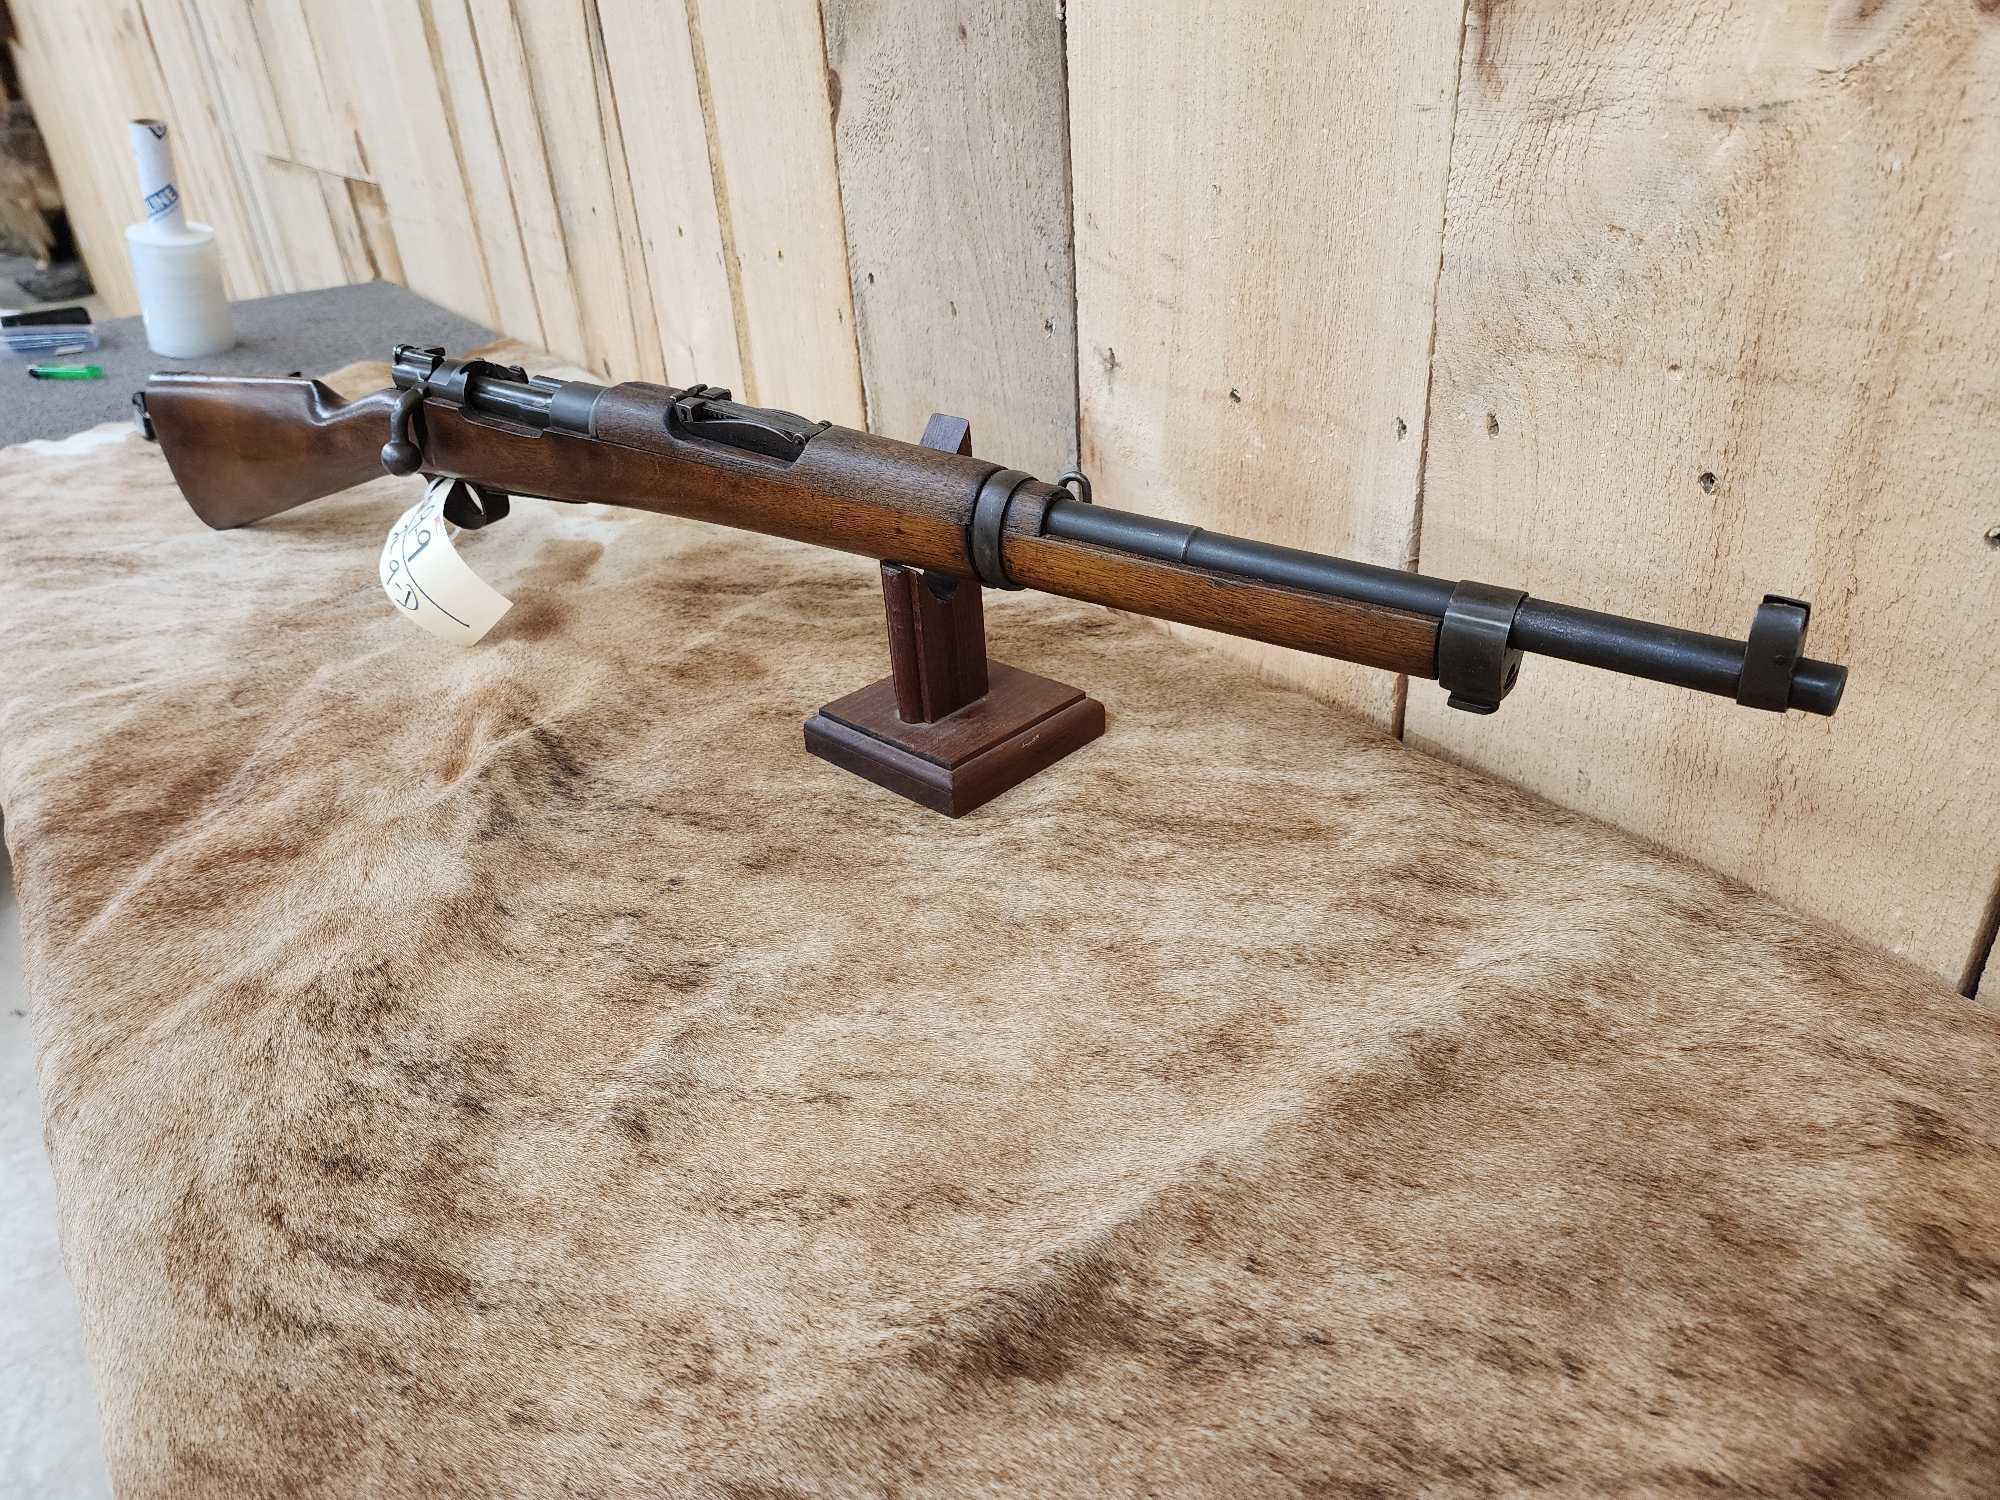 7mm German Mauser Bolt Action Rifle